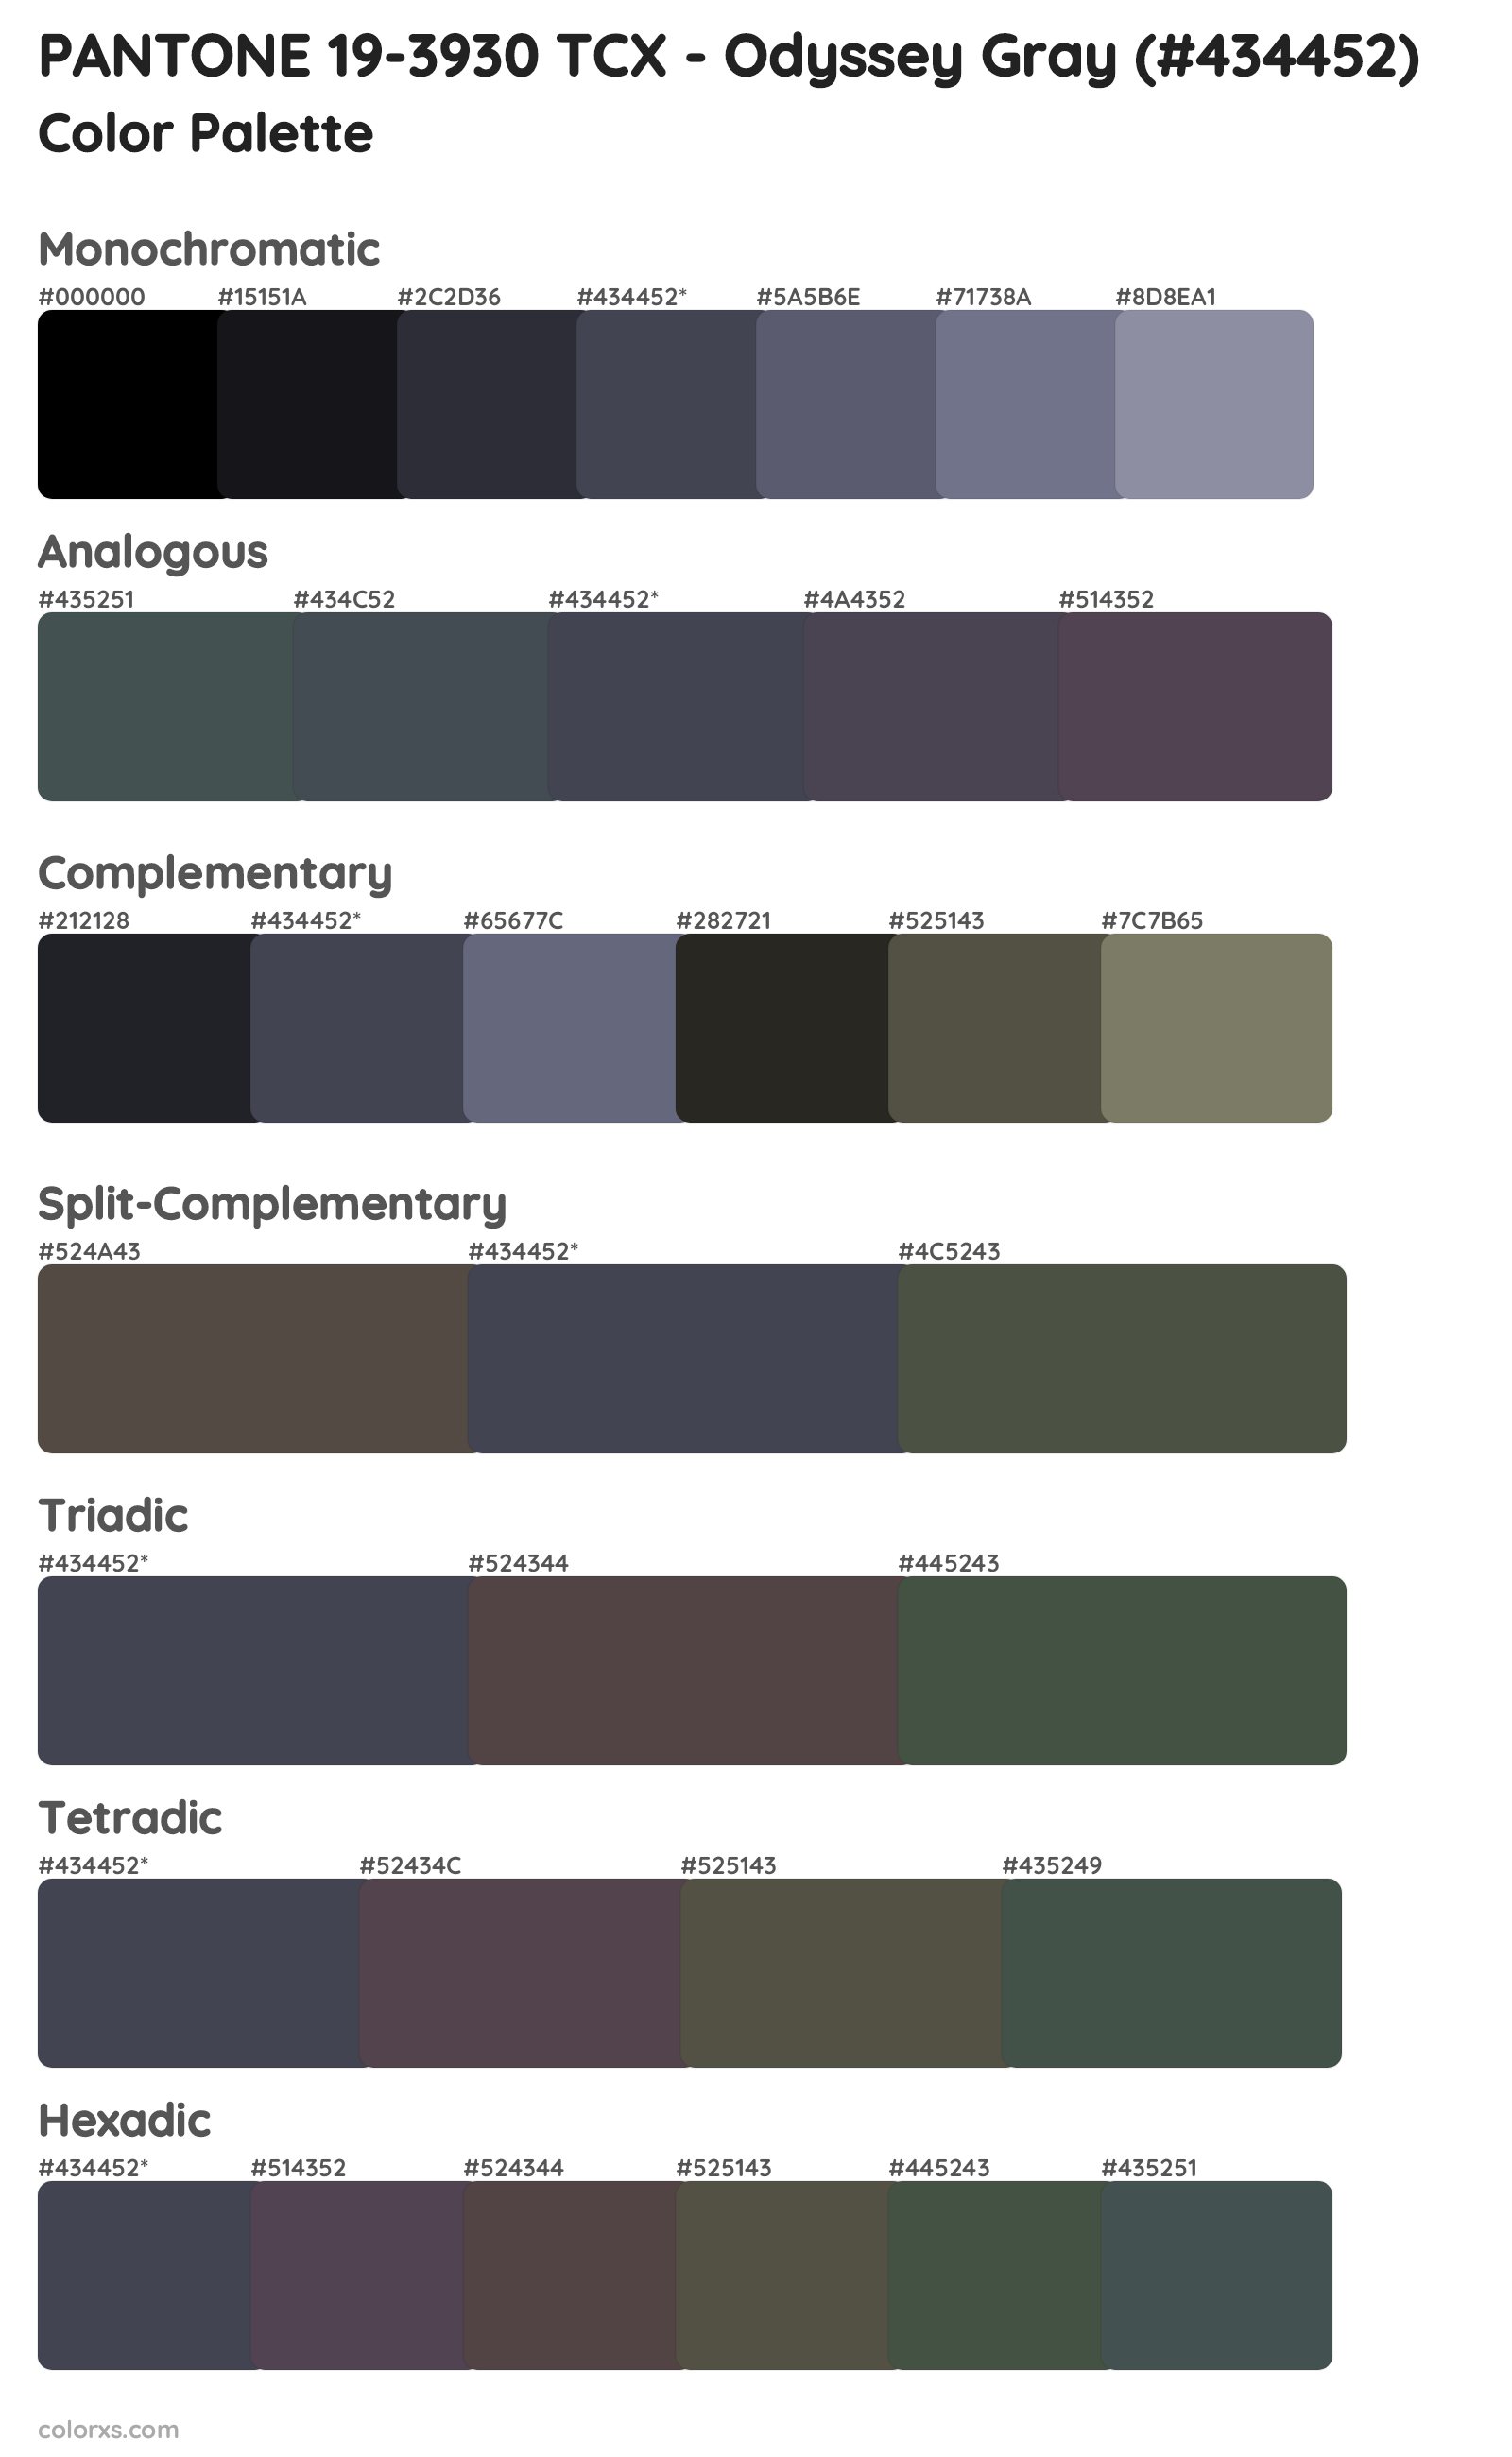 PANTONE 19-3930 TCX - Odyssey Gray Color Scheme Palettes